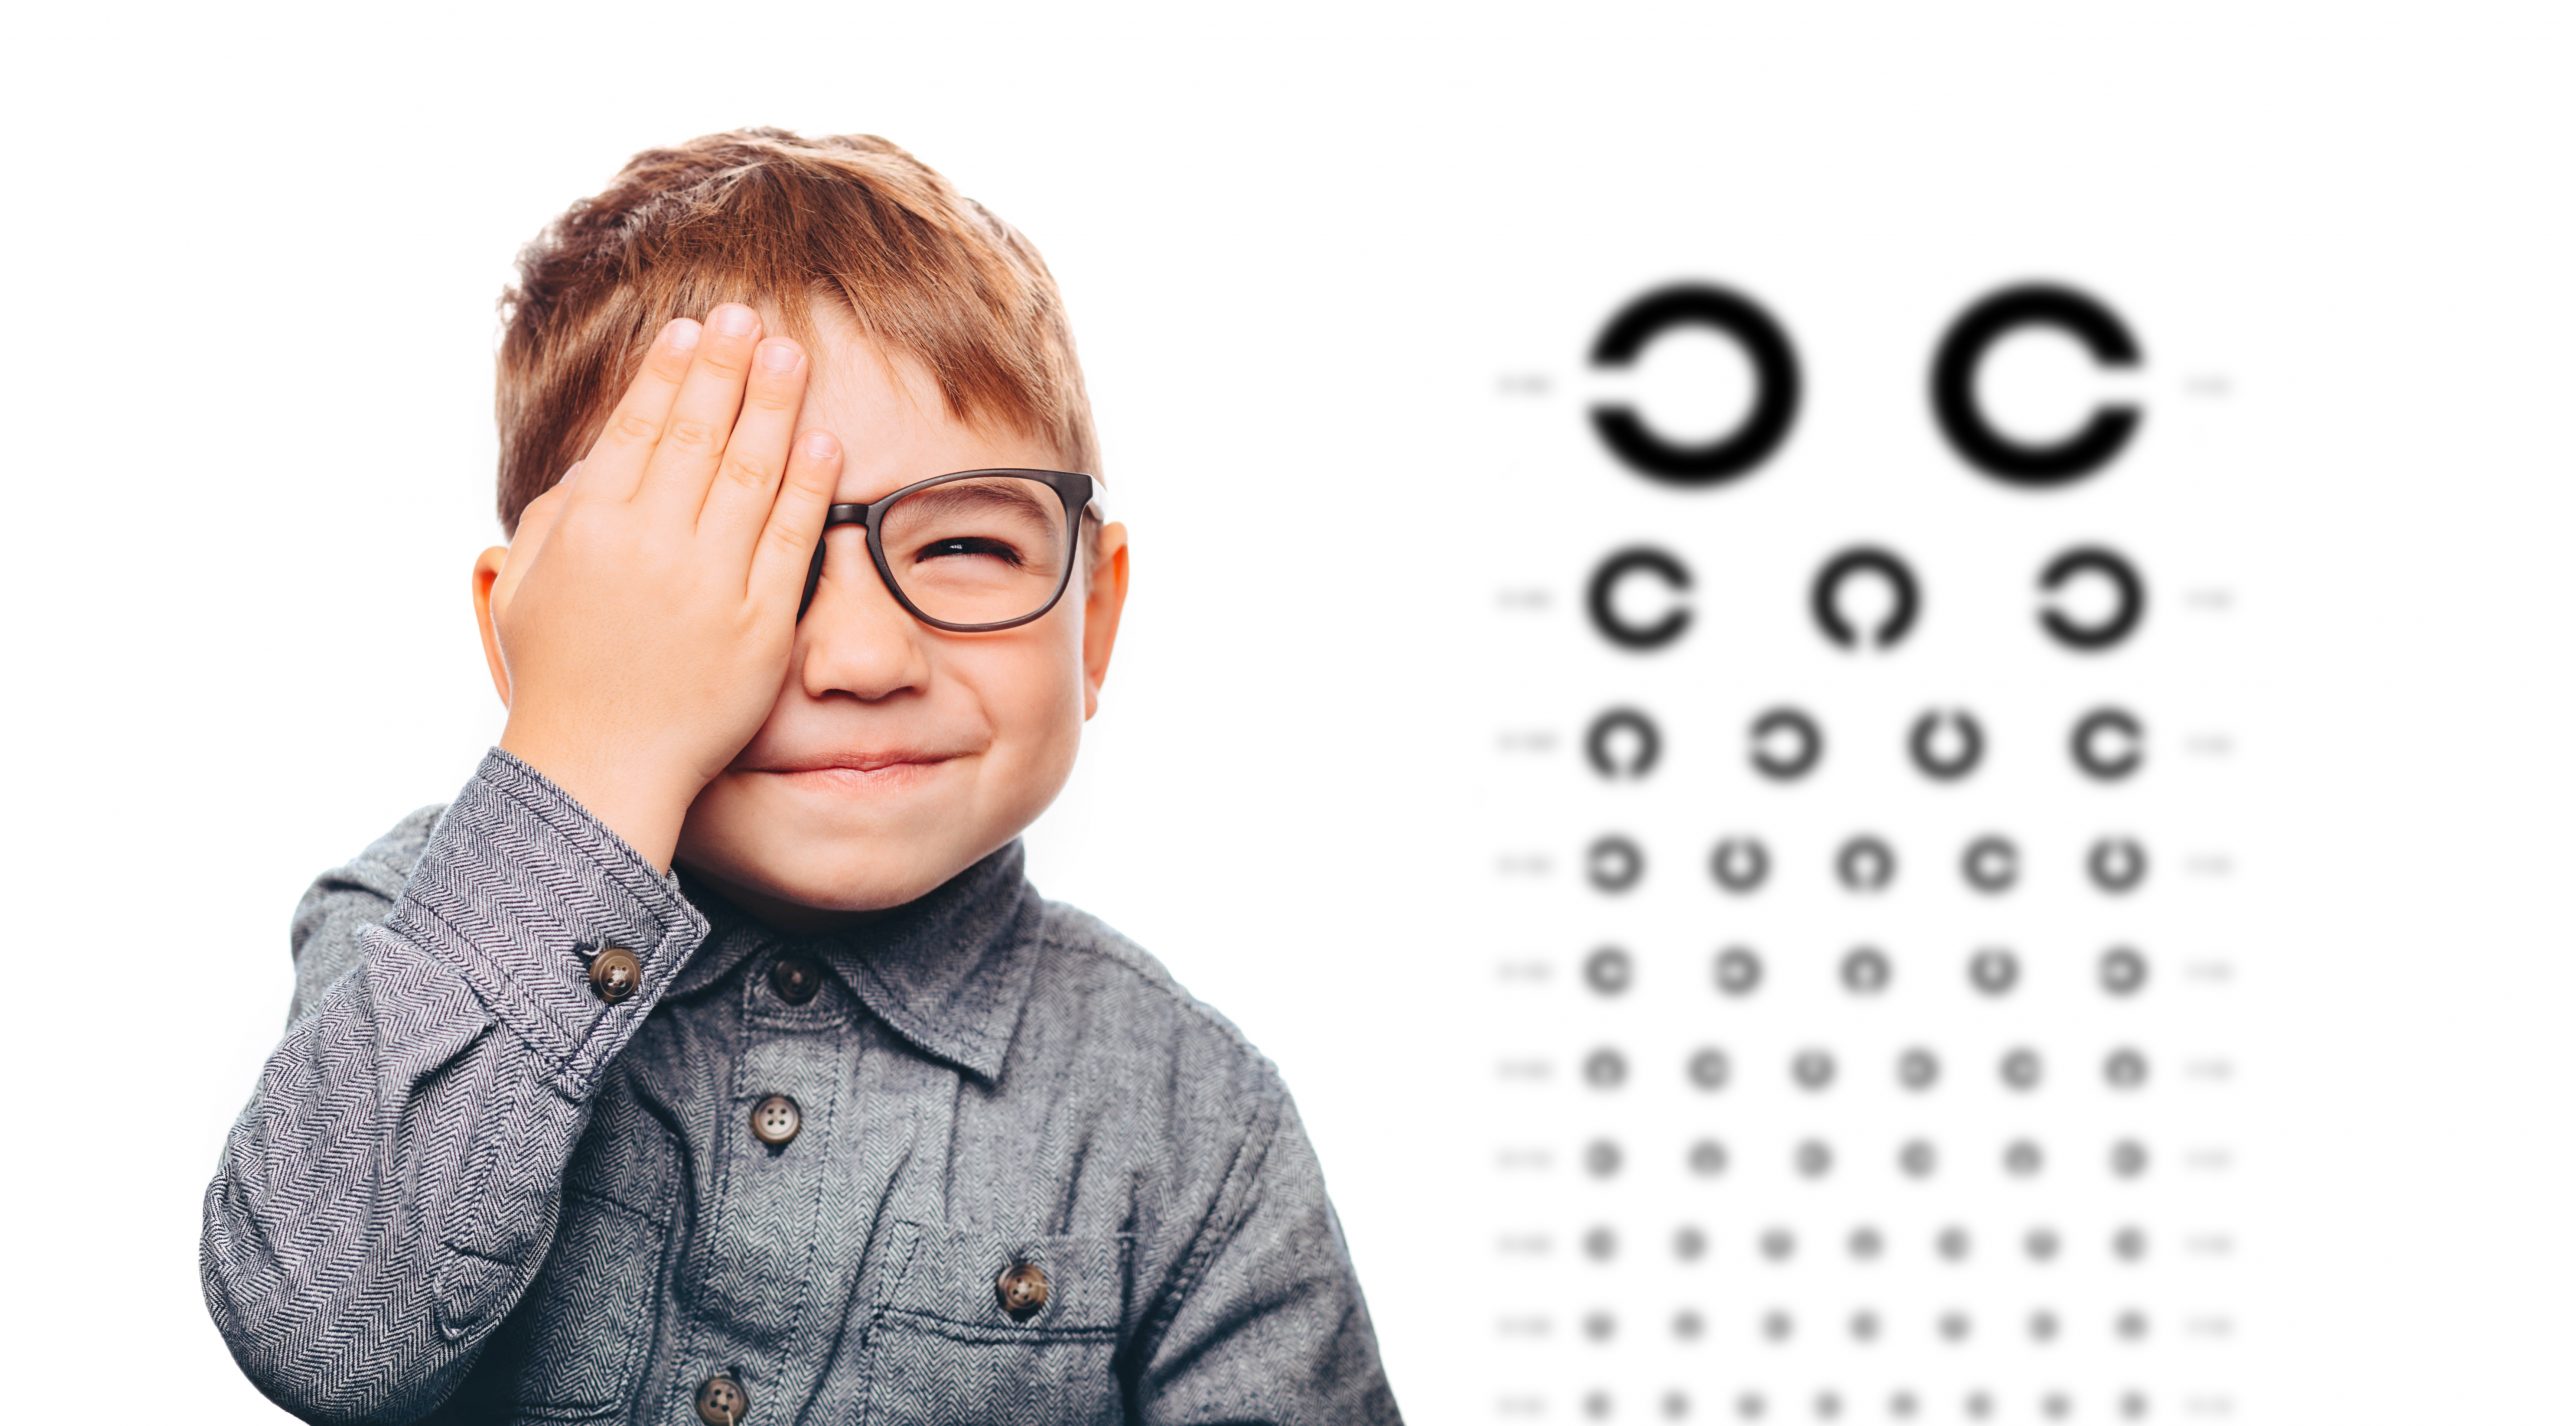 Boy having eye exam with eye chart and covering one eye